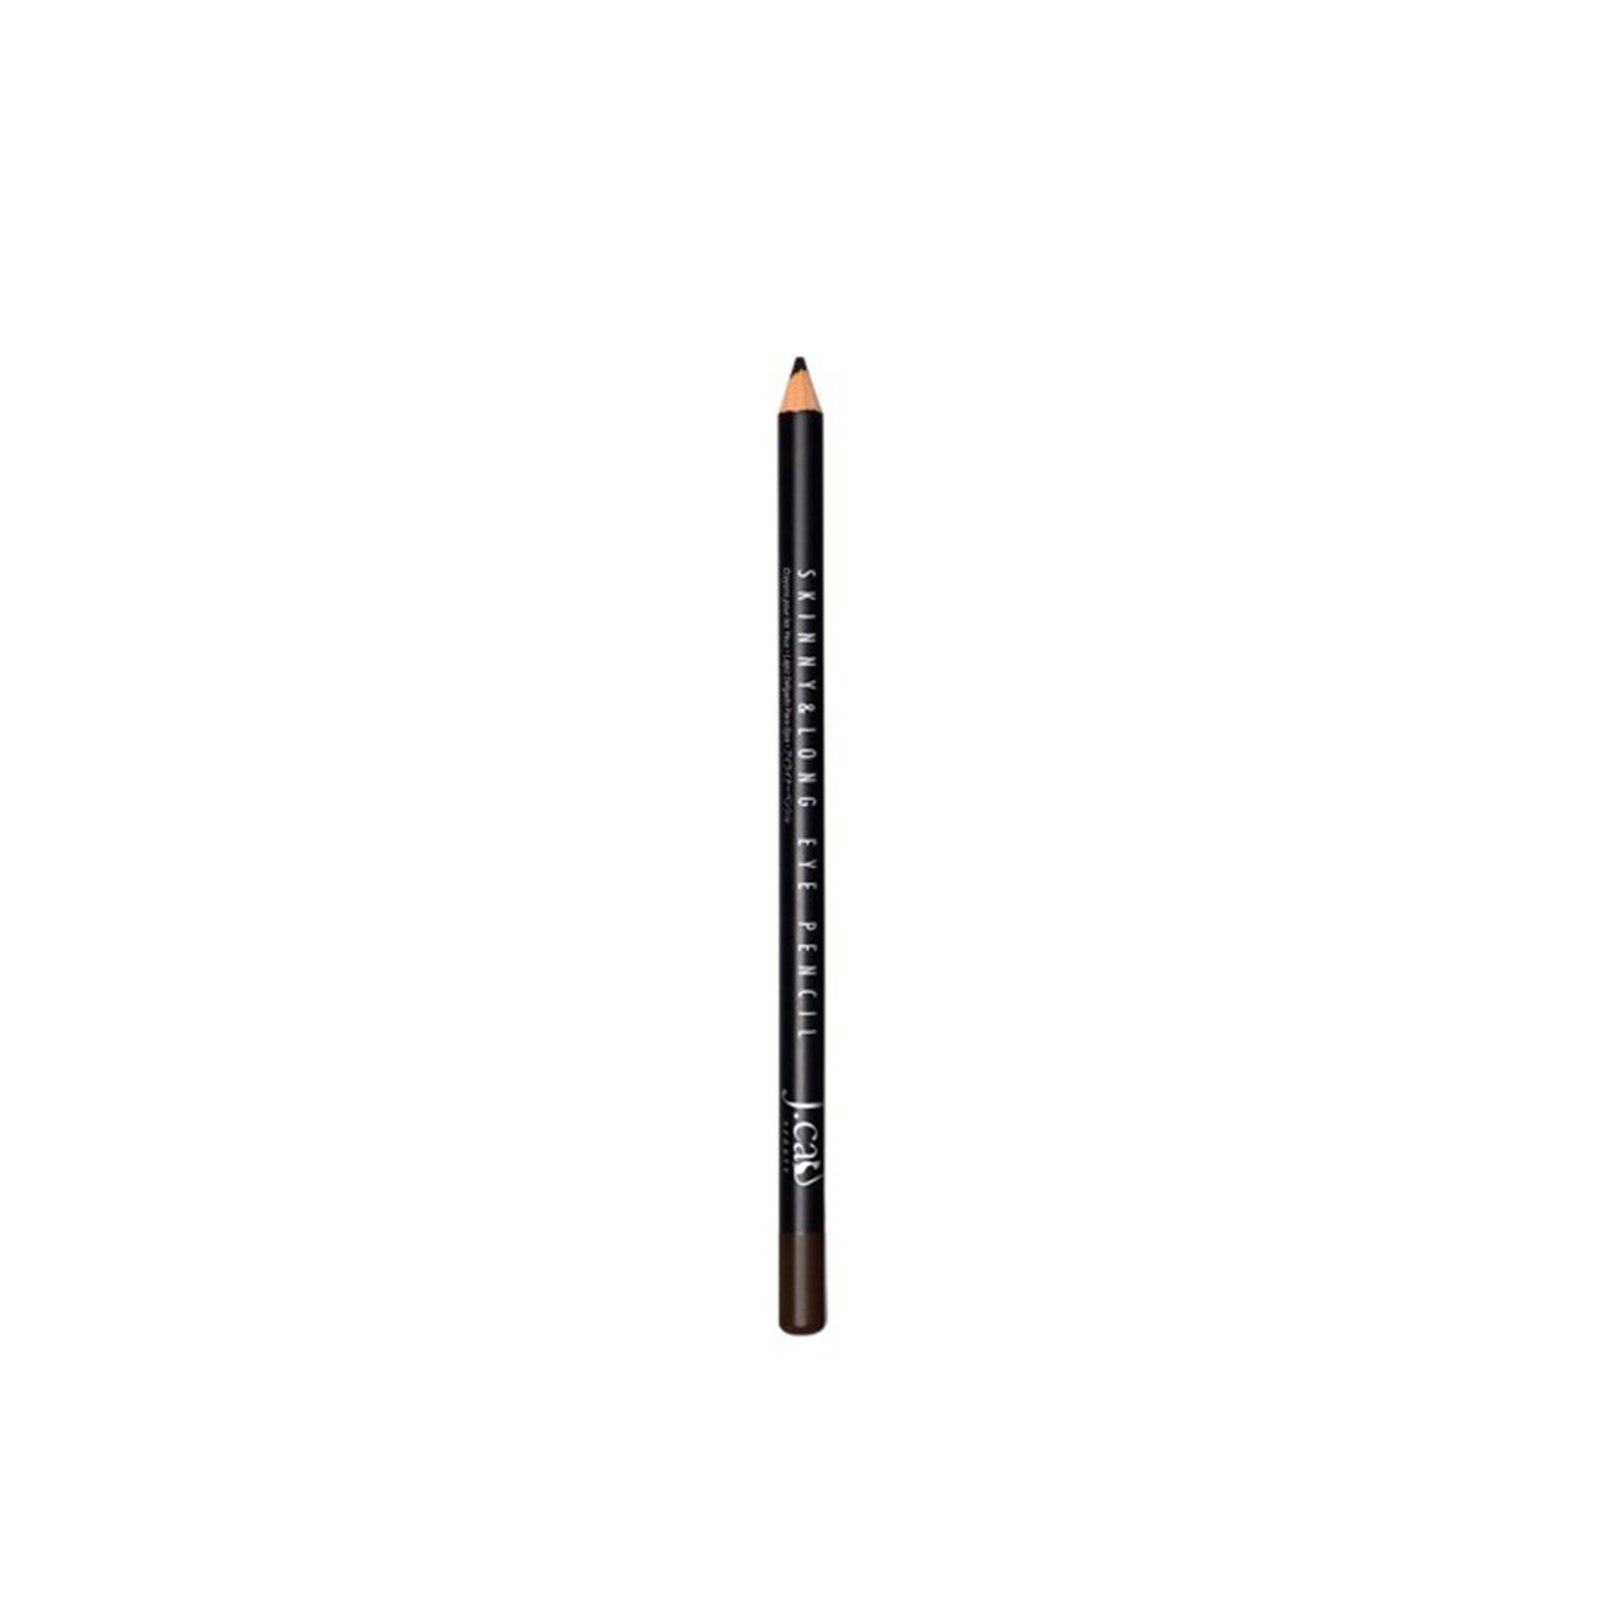 J.Cat Skinny & Long Eye Pencil 112 Dark Brown 2g (0.08 oz)